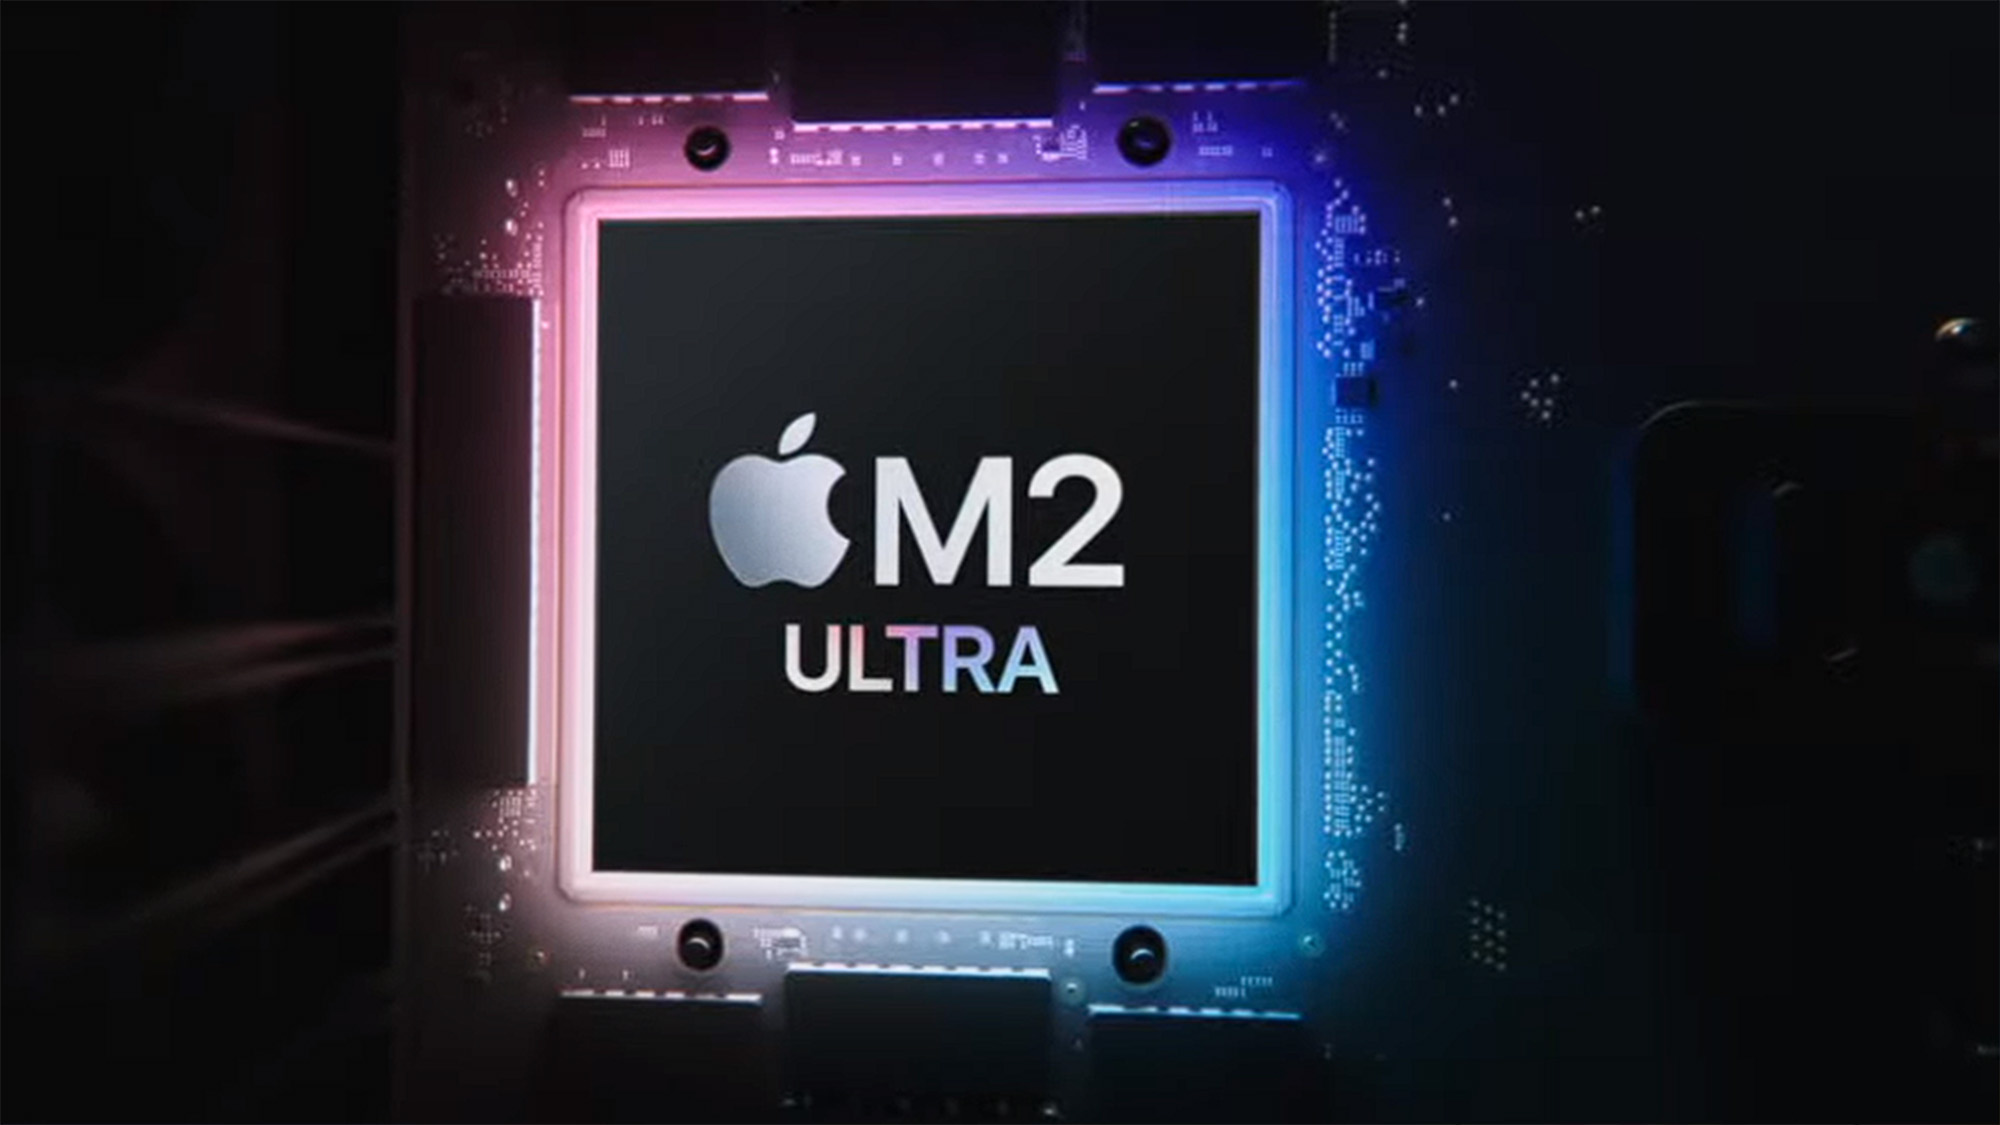 Apple Mac Studio Update at WWDC: M2 Ultra Option Debuts - CNET